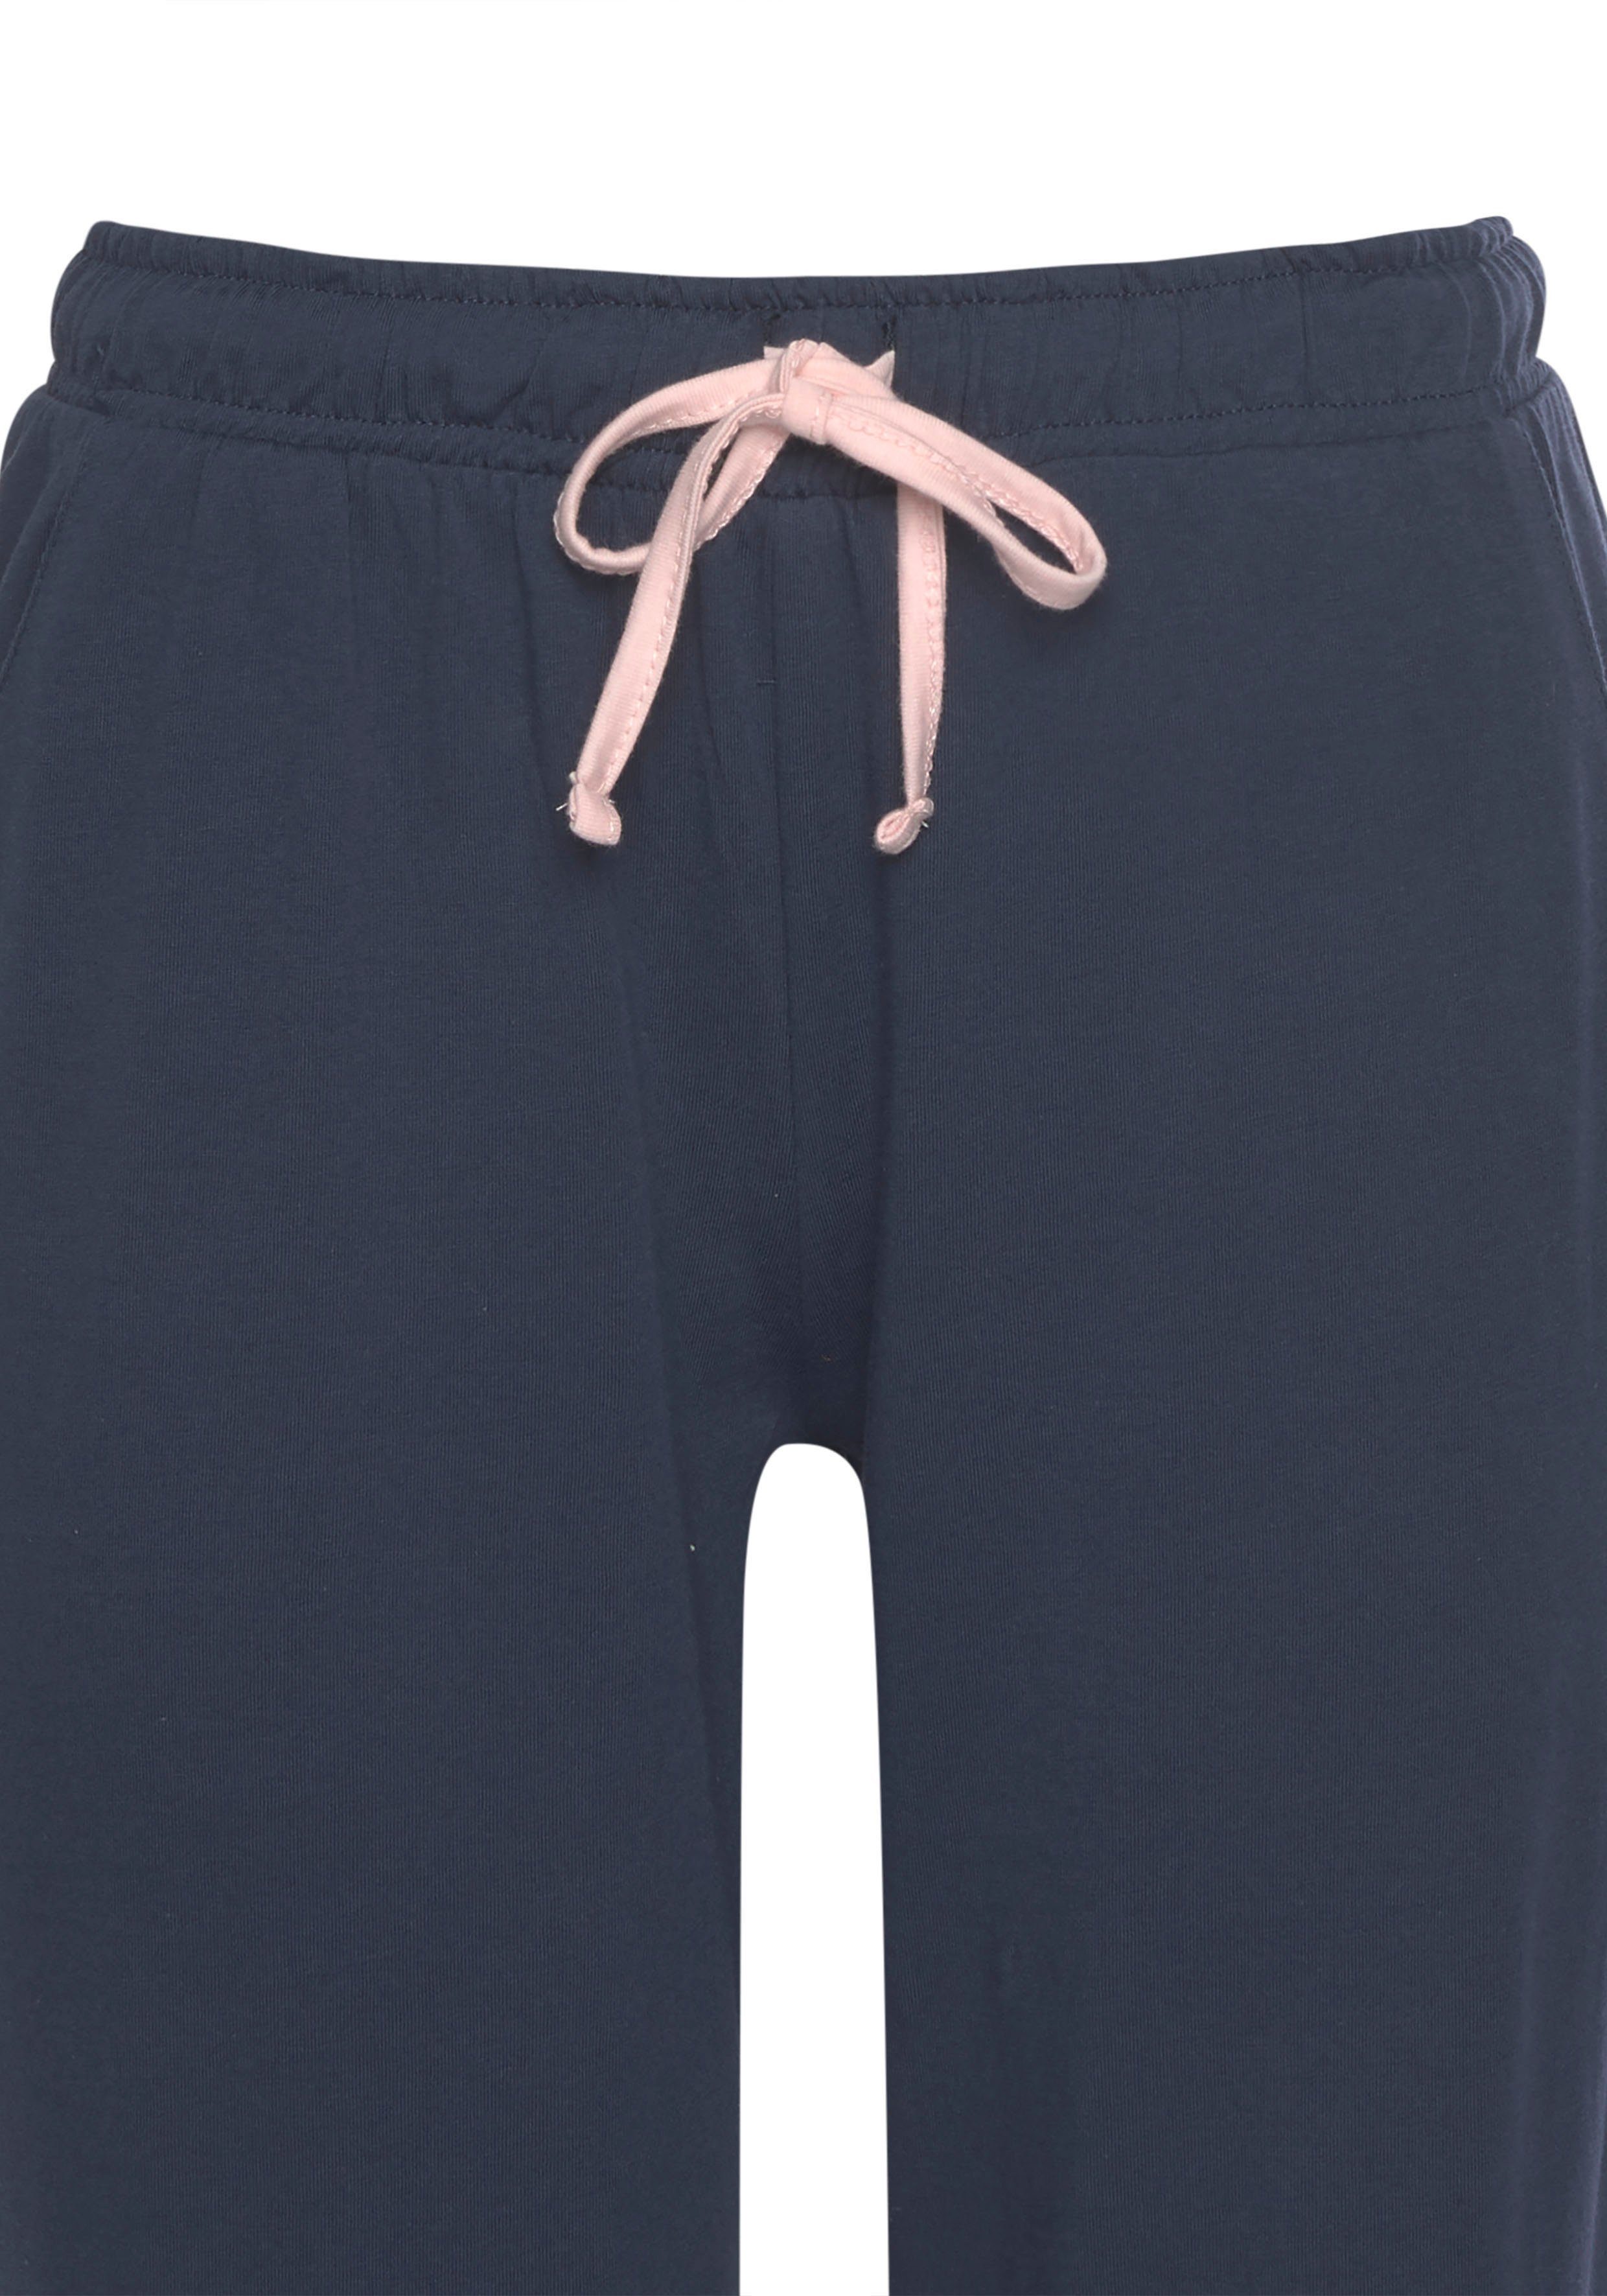 Stück) Raglanärmeln KangaROOS kontrastfarbenen 1 rosa-dunkelblau tlg., Pyjama mit (2